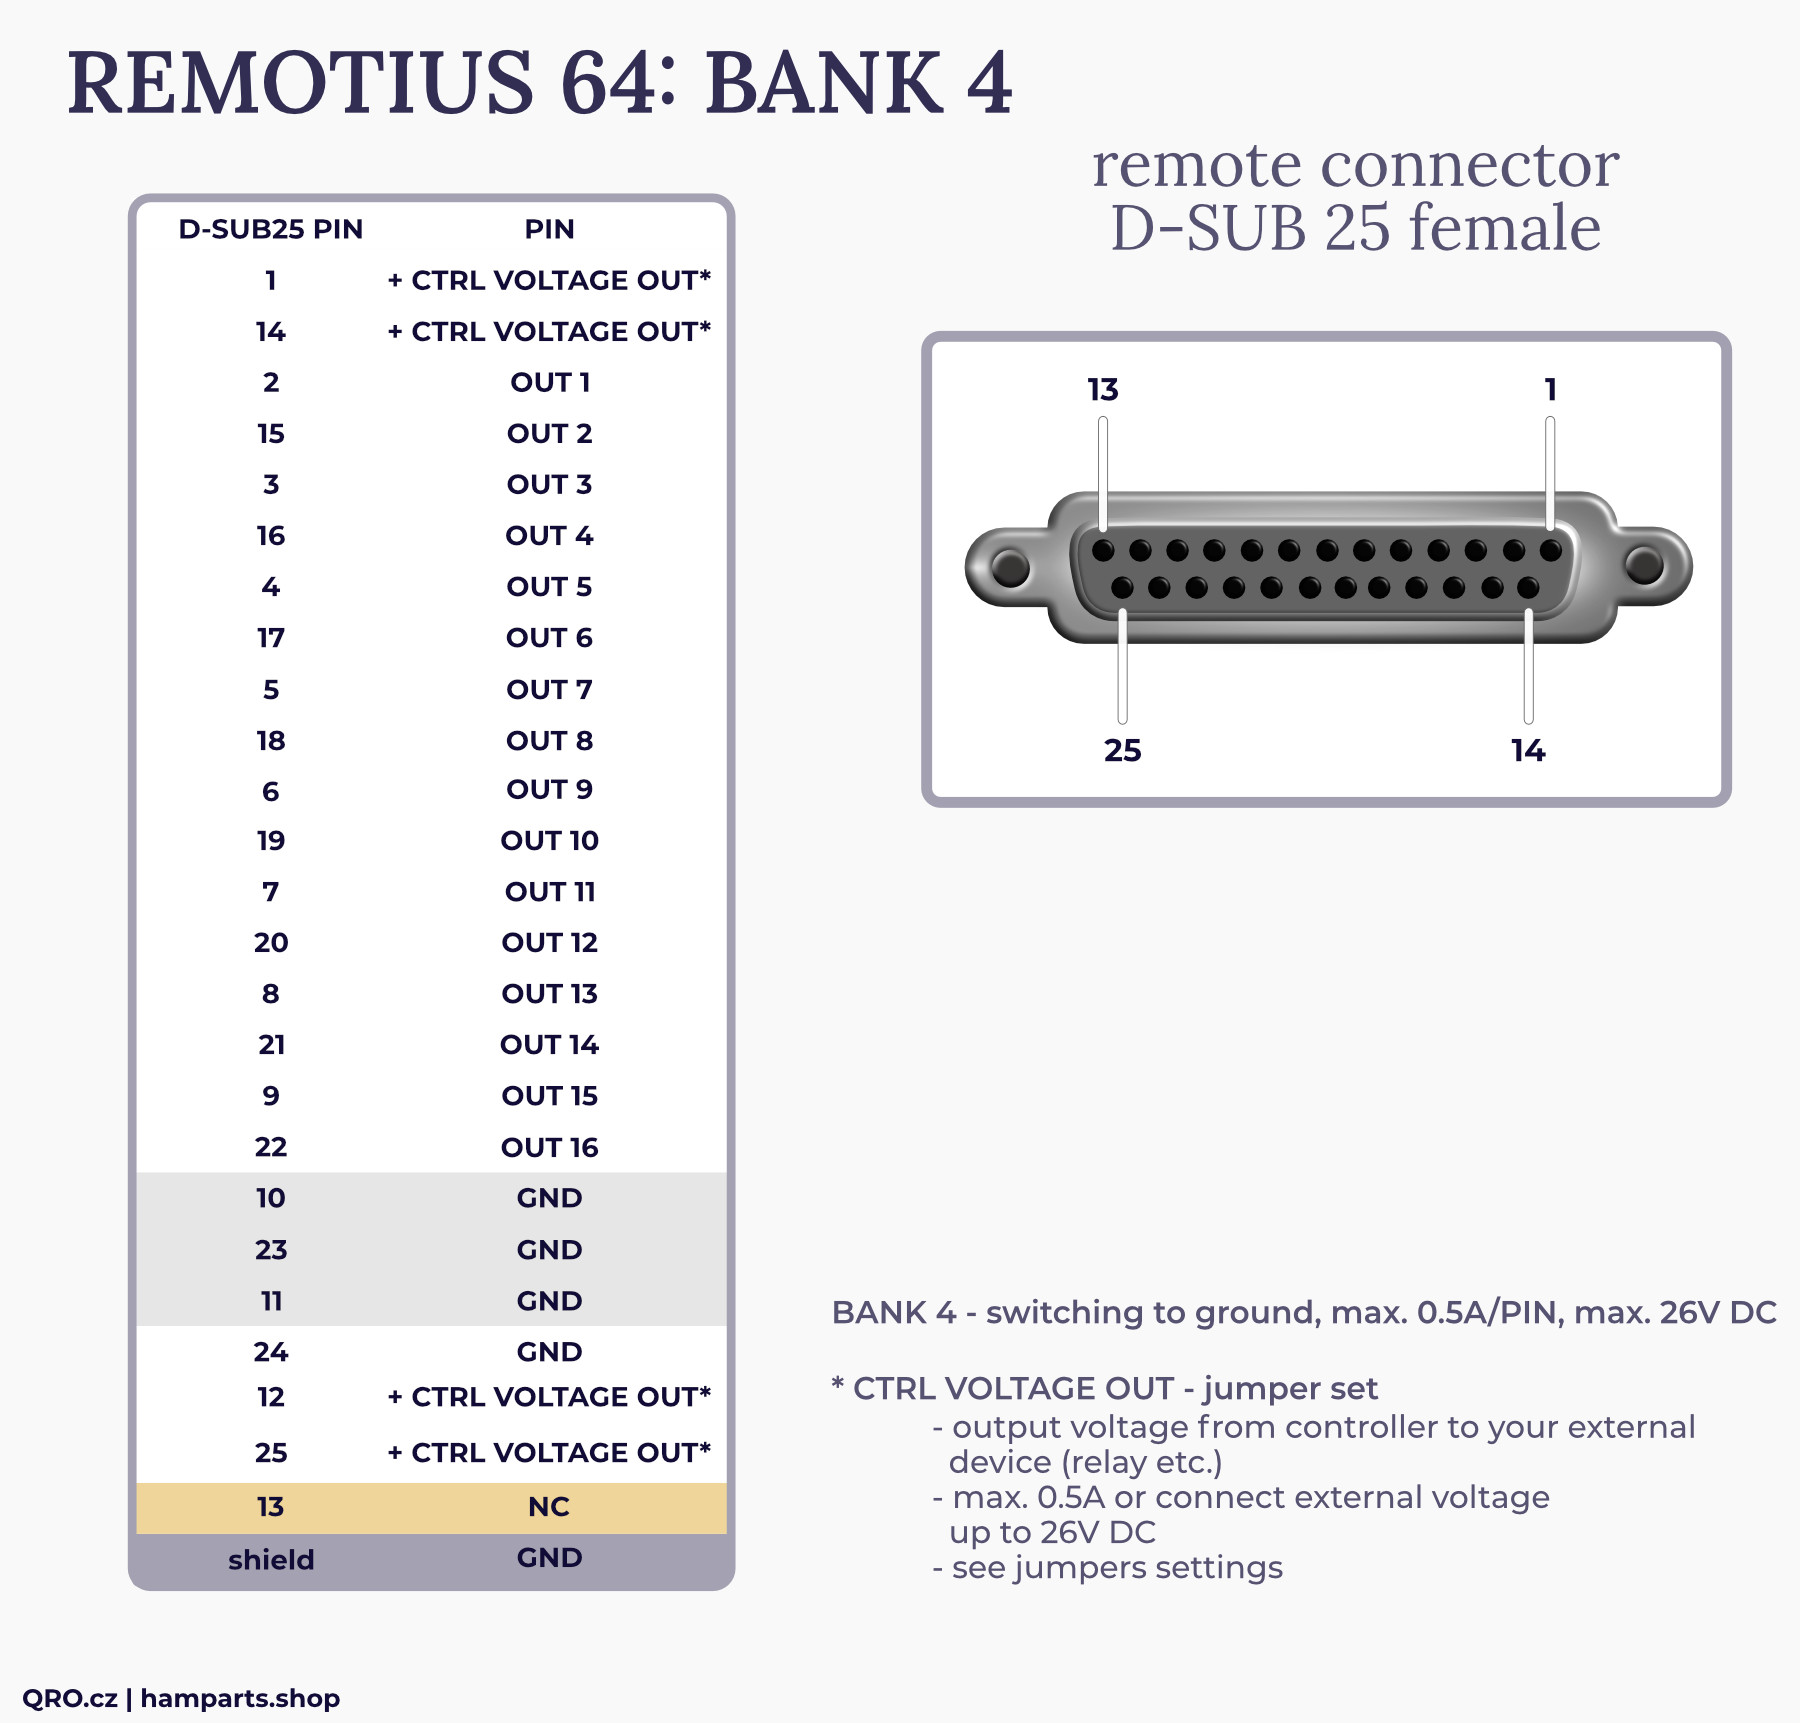 remotius 64 bank 4 remote connector D-SUB25 female qro.cz hamparts.shop